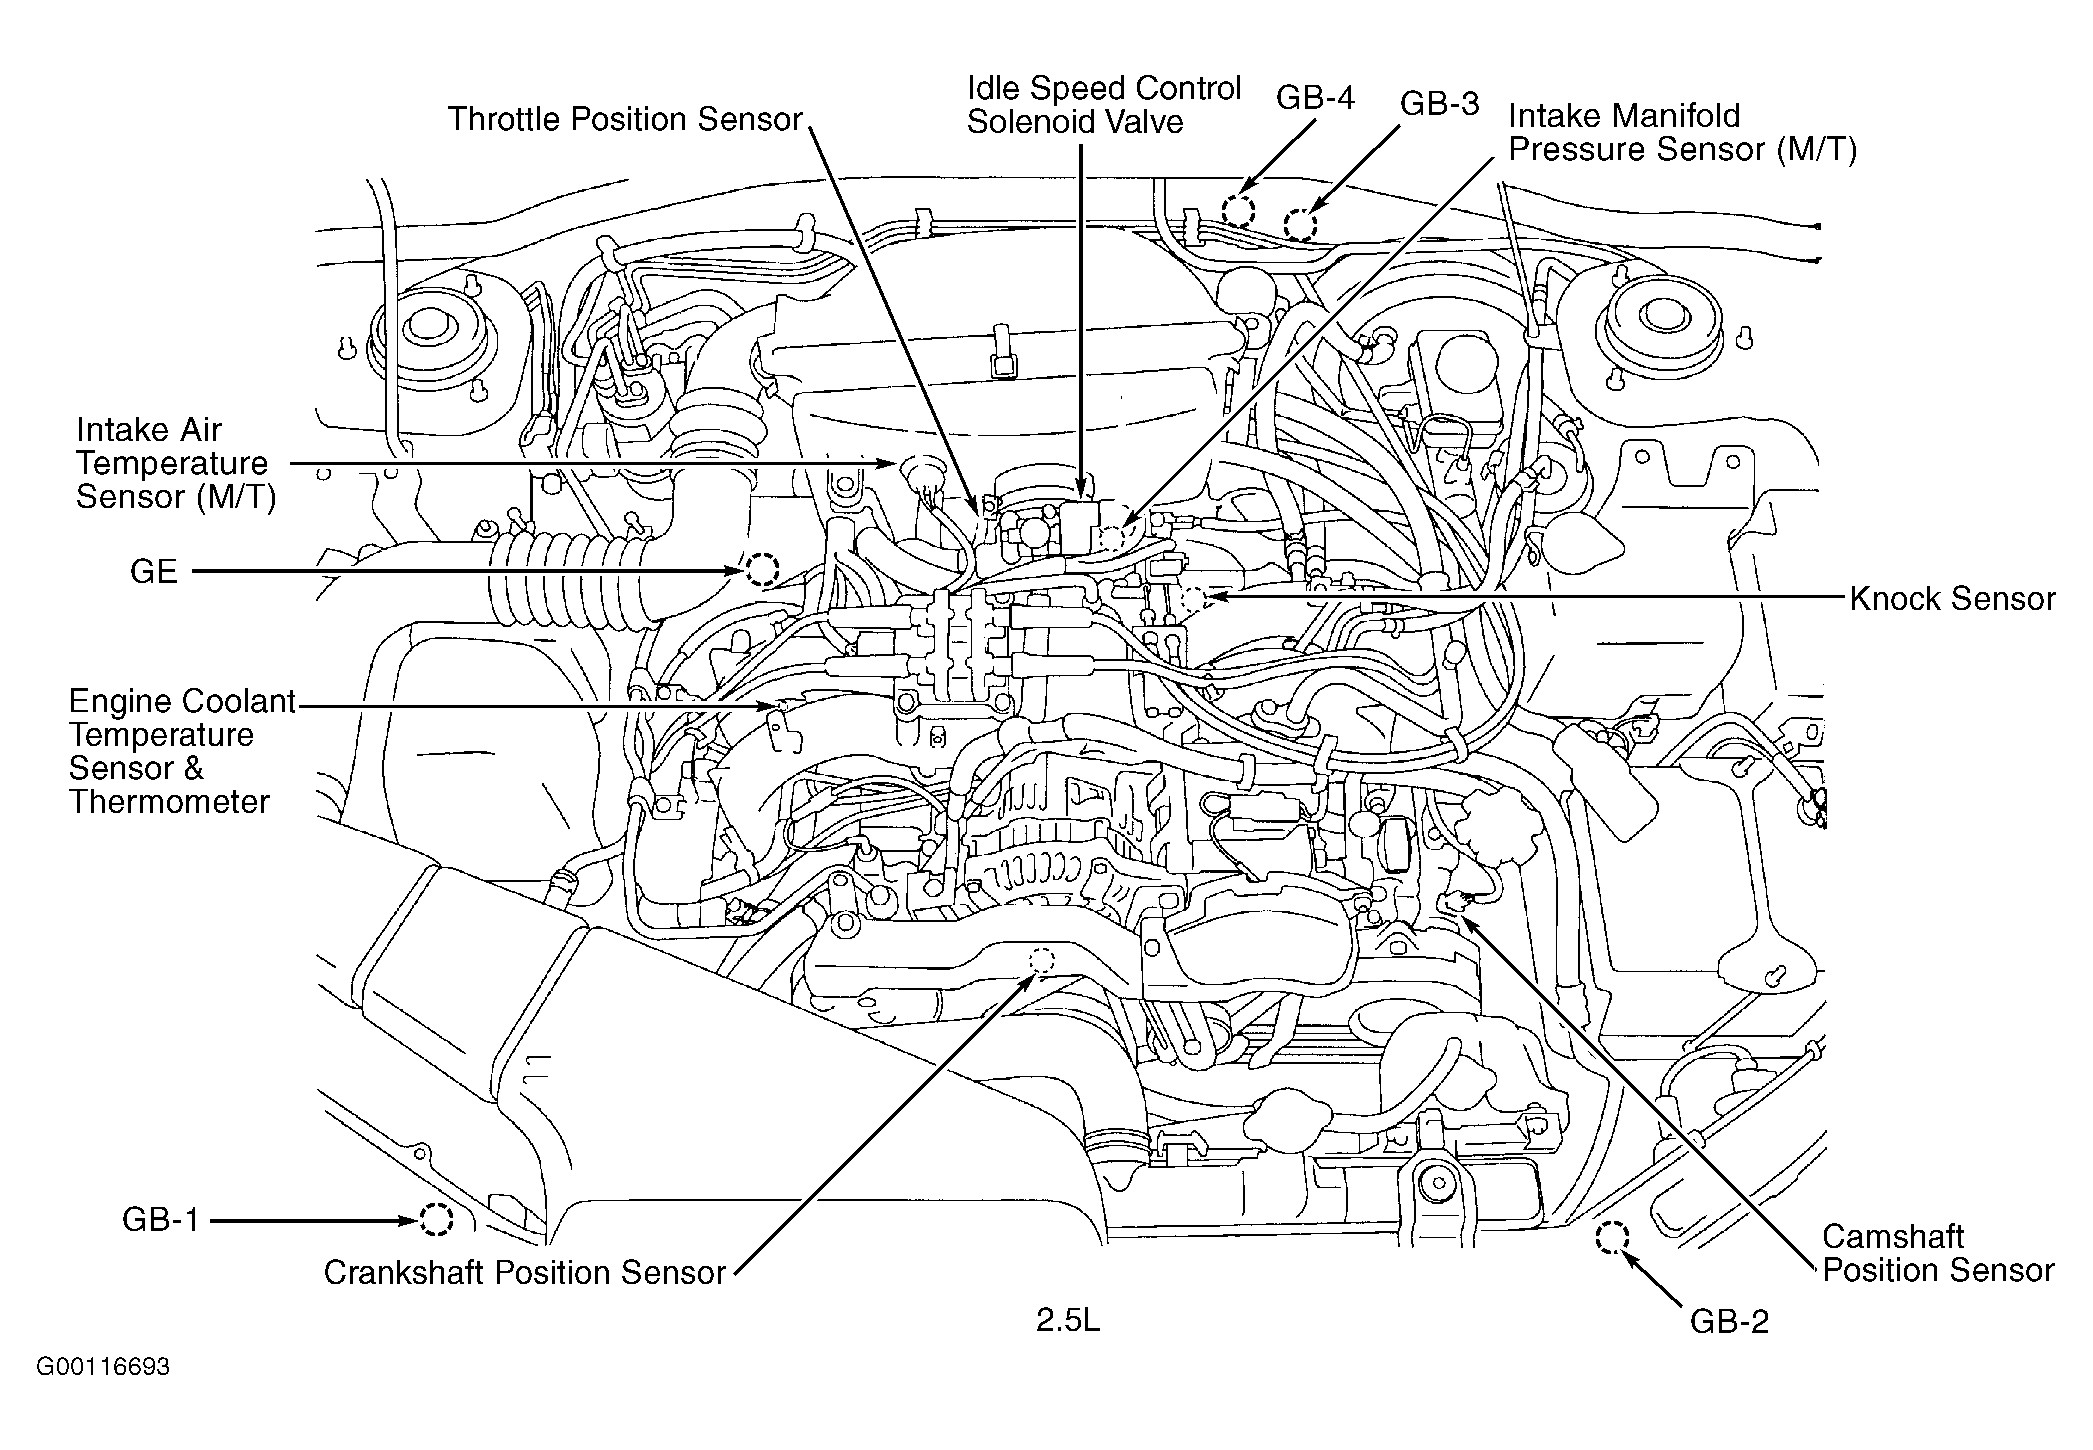 Subaru Legacy Engine Diagram 2 I Have A Manual 2001 Subaru Legacy with A 2 5l Engine where Can I